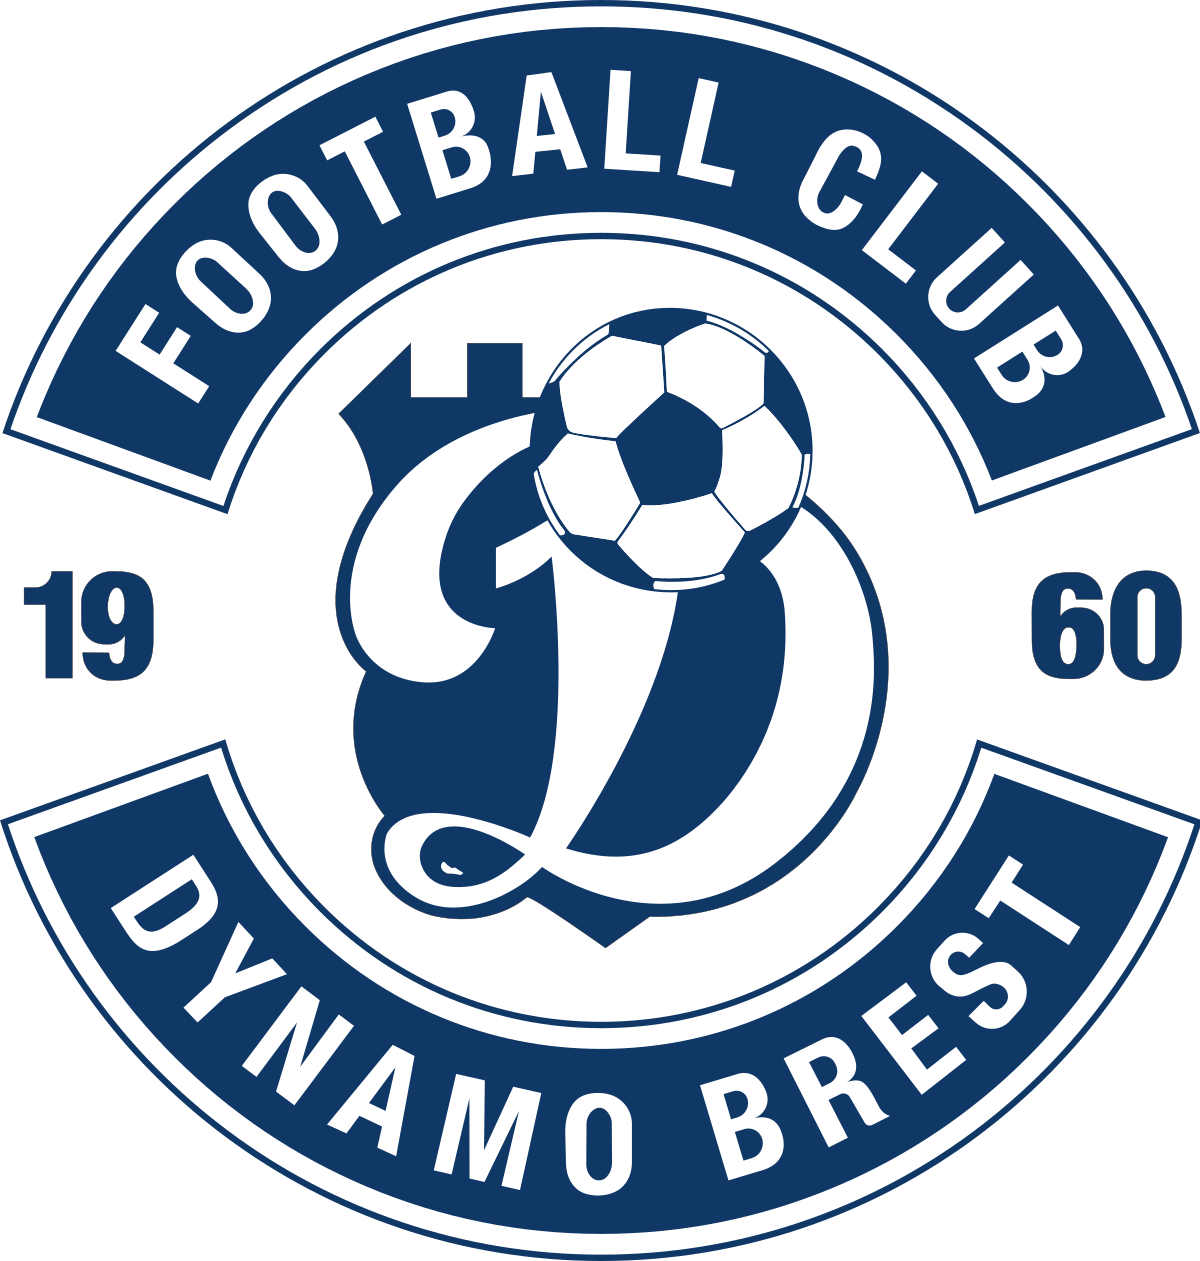 Dinamo Brest (W)